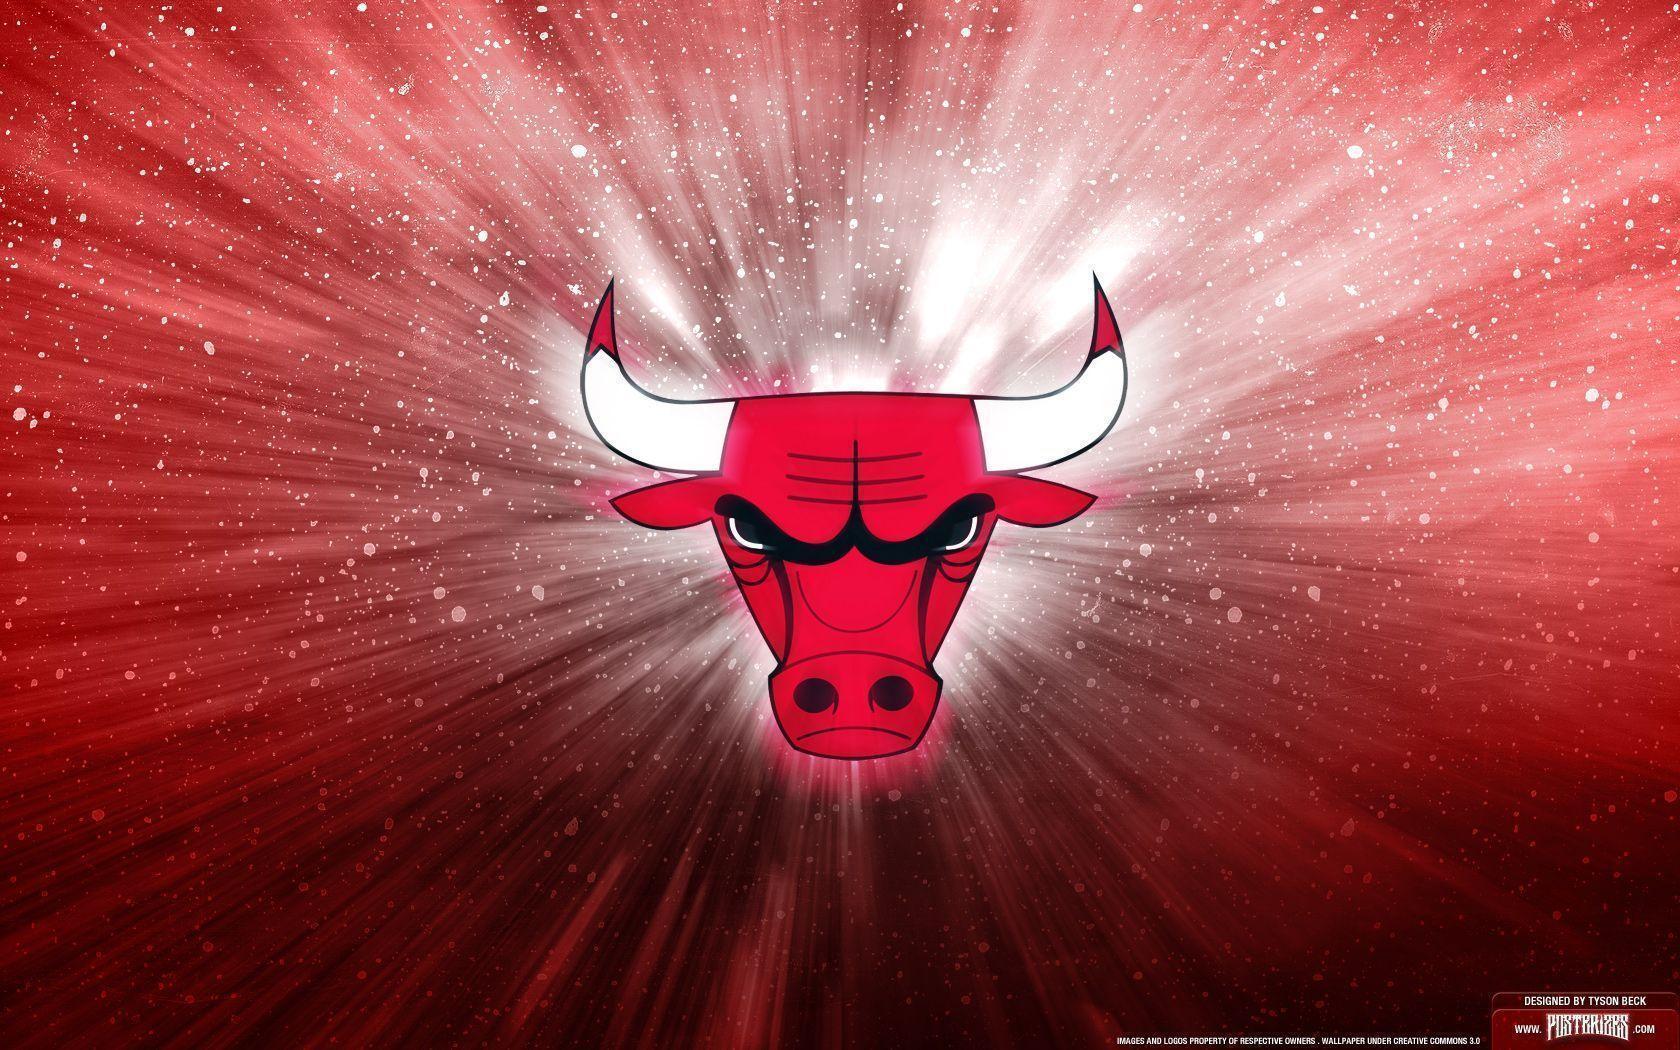 Chicago Bulls 27 97153 Image HD Wallpaper. Wallfoy.com